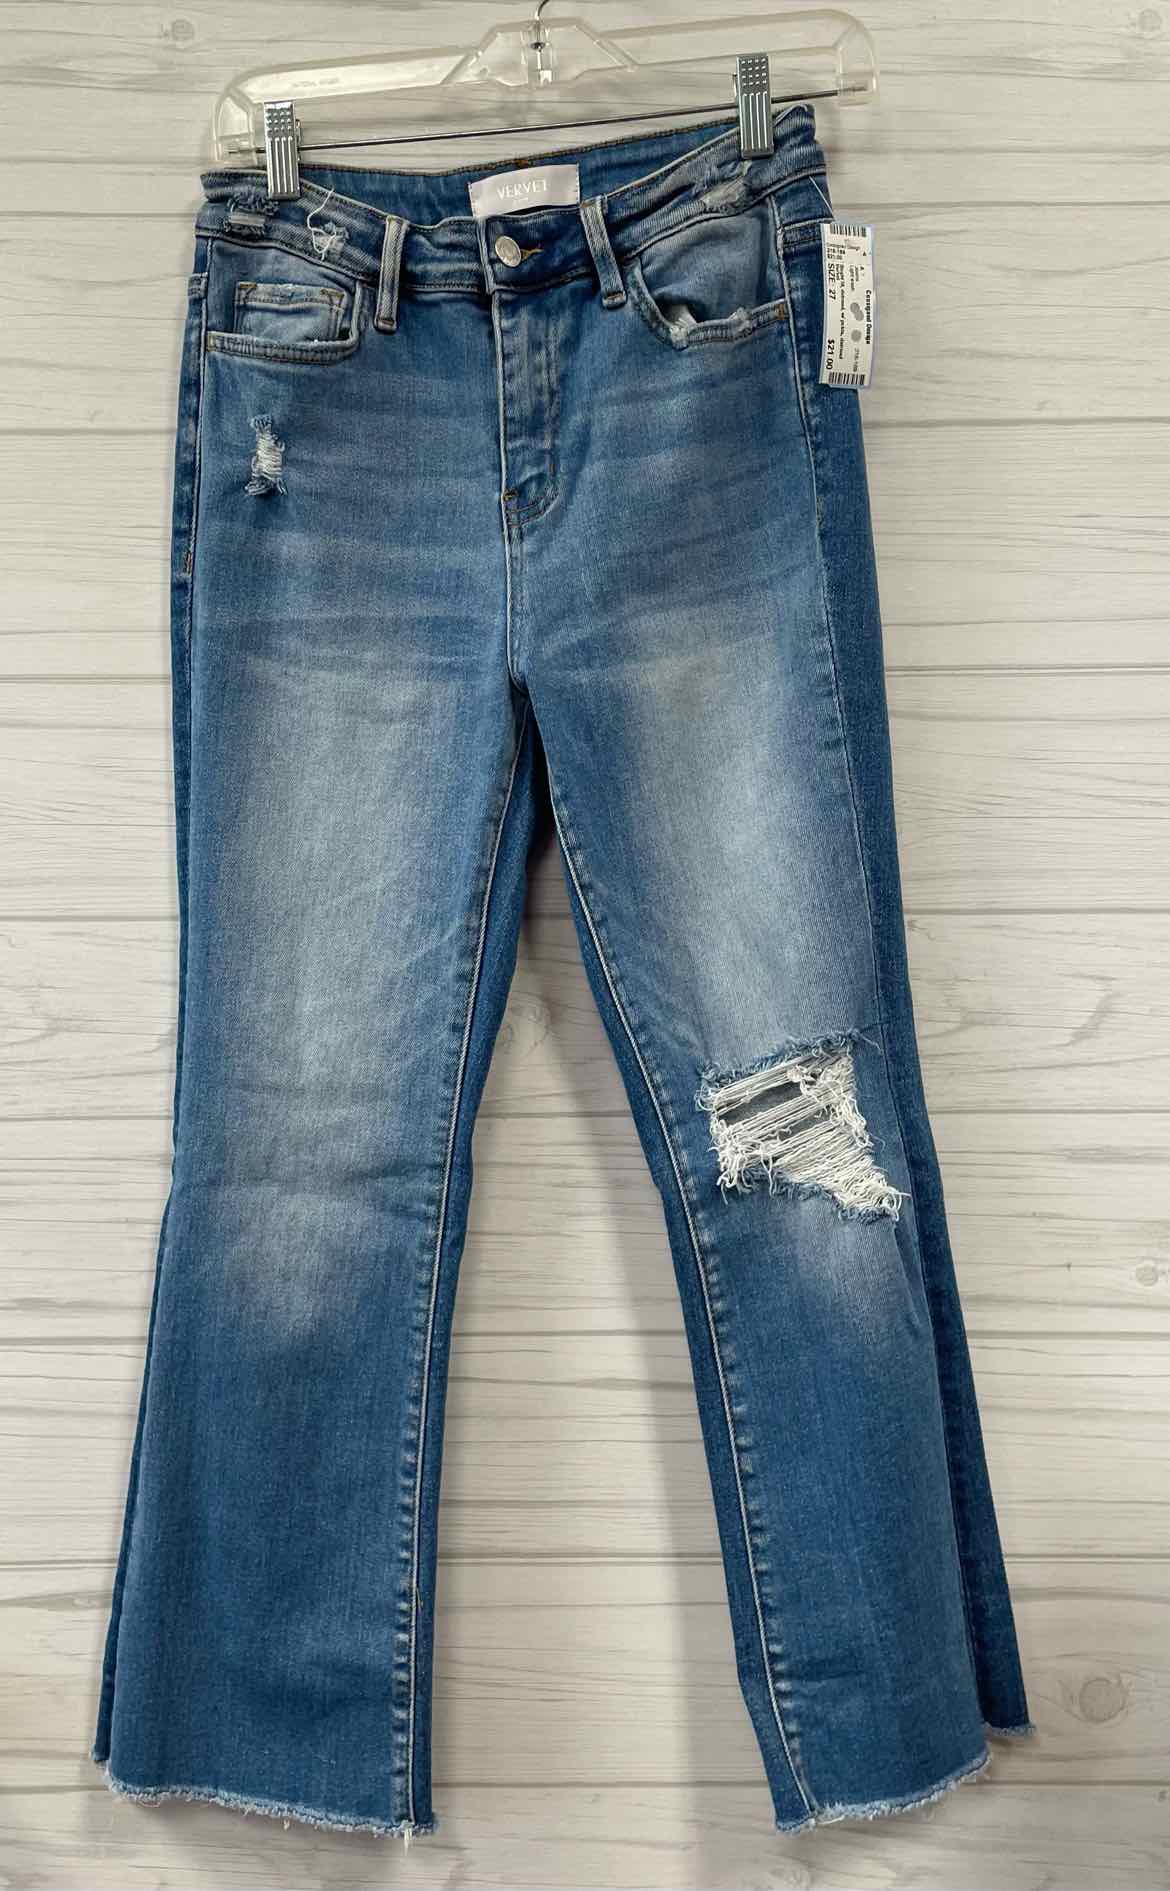 Size 27 Vervet Jeans